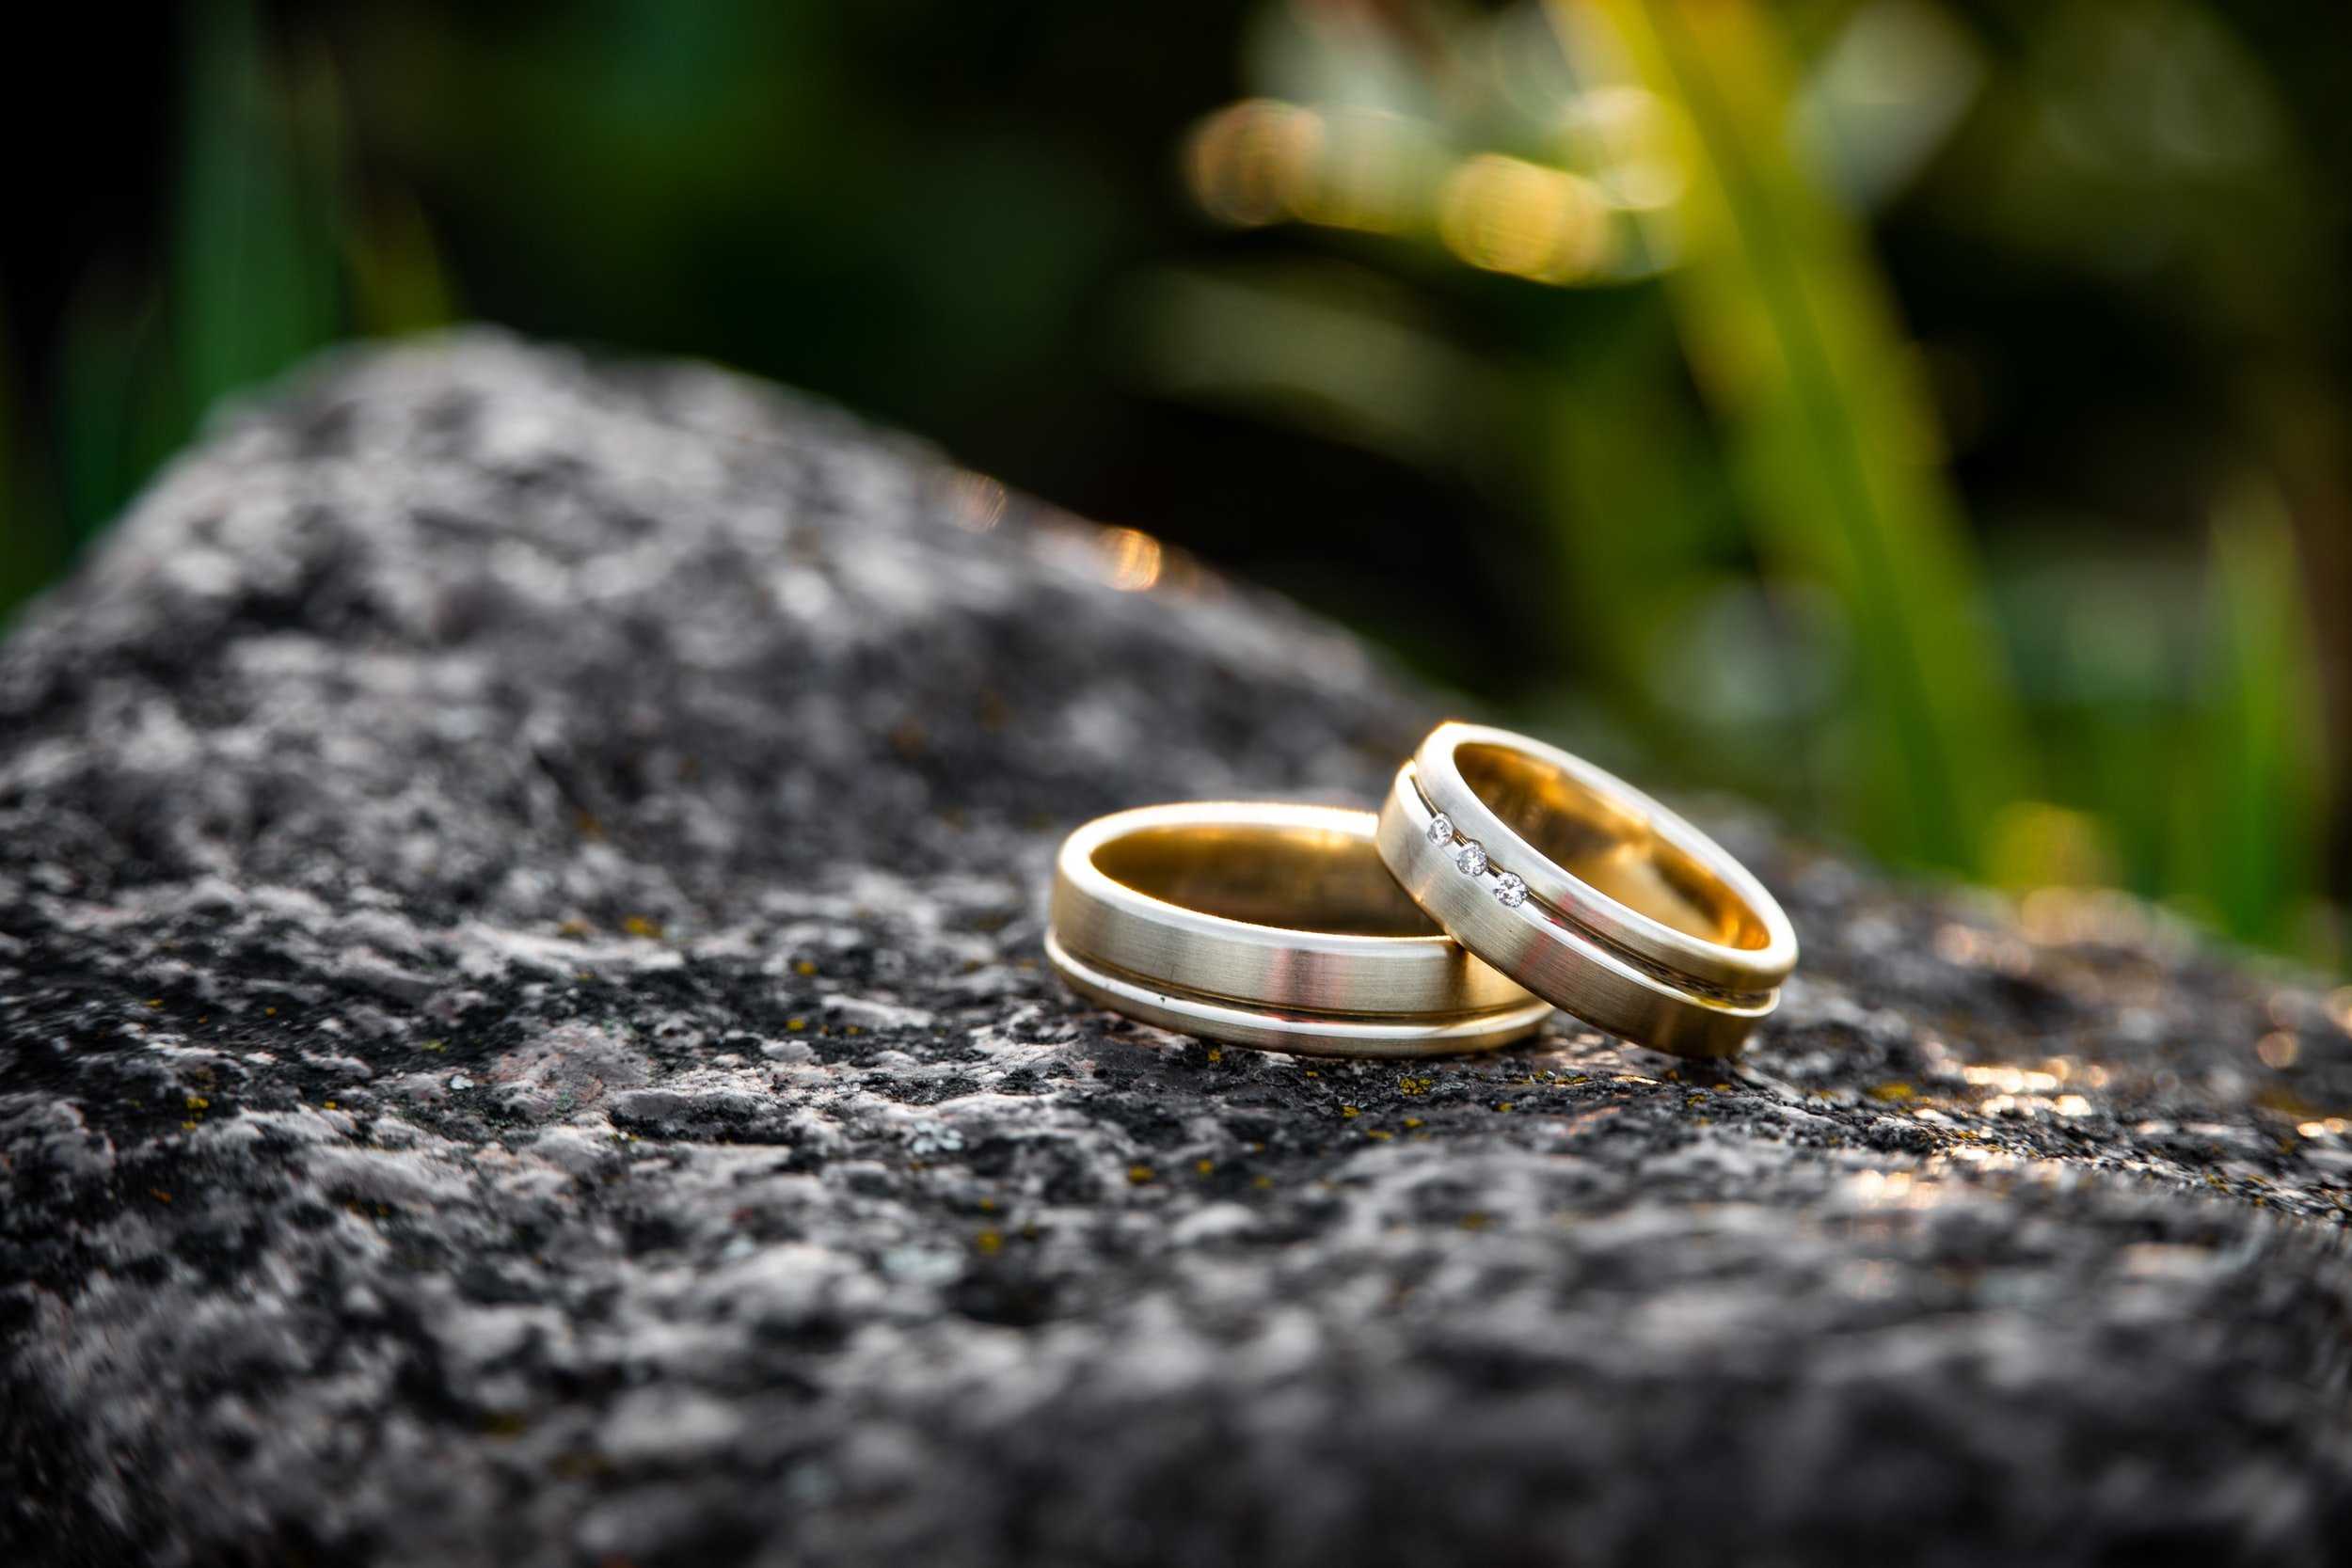 How can we exchange wedding rings in secret? - BAUNAT